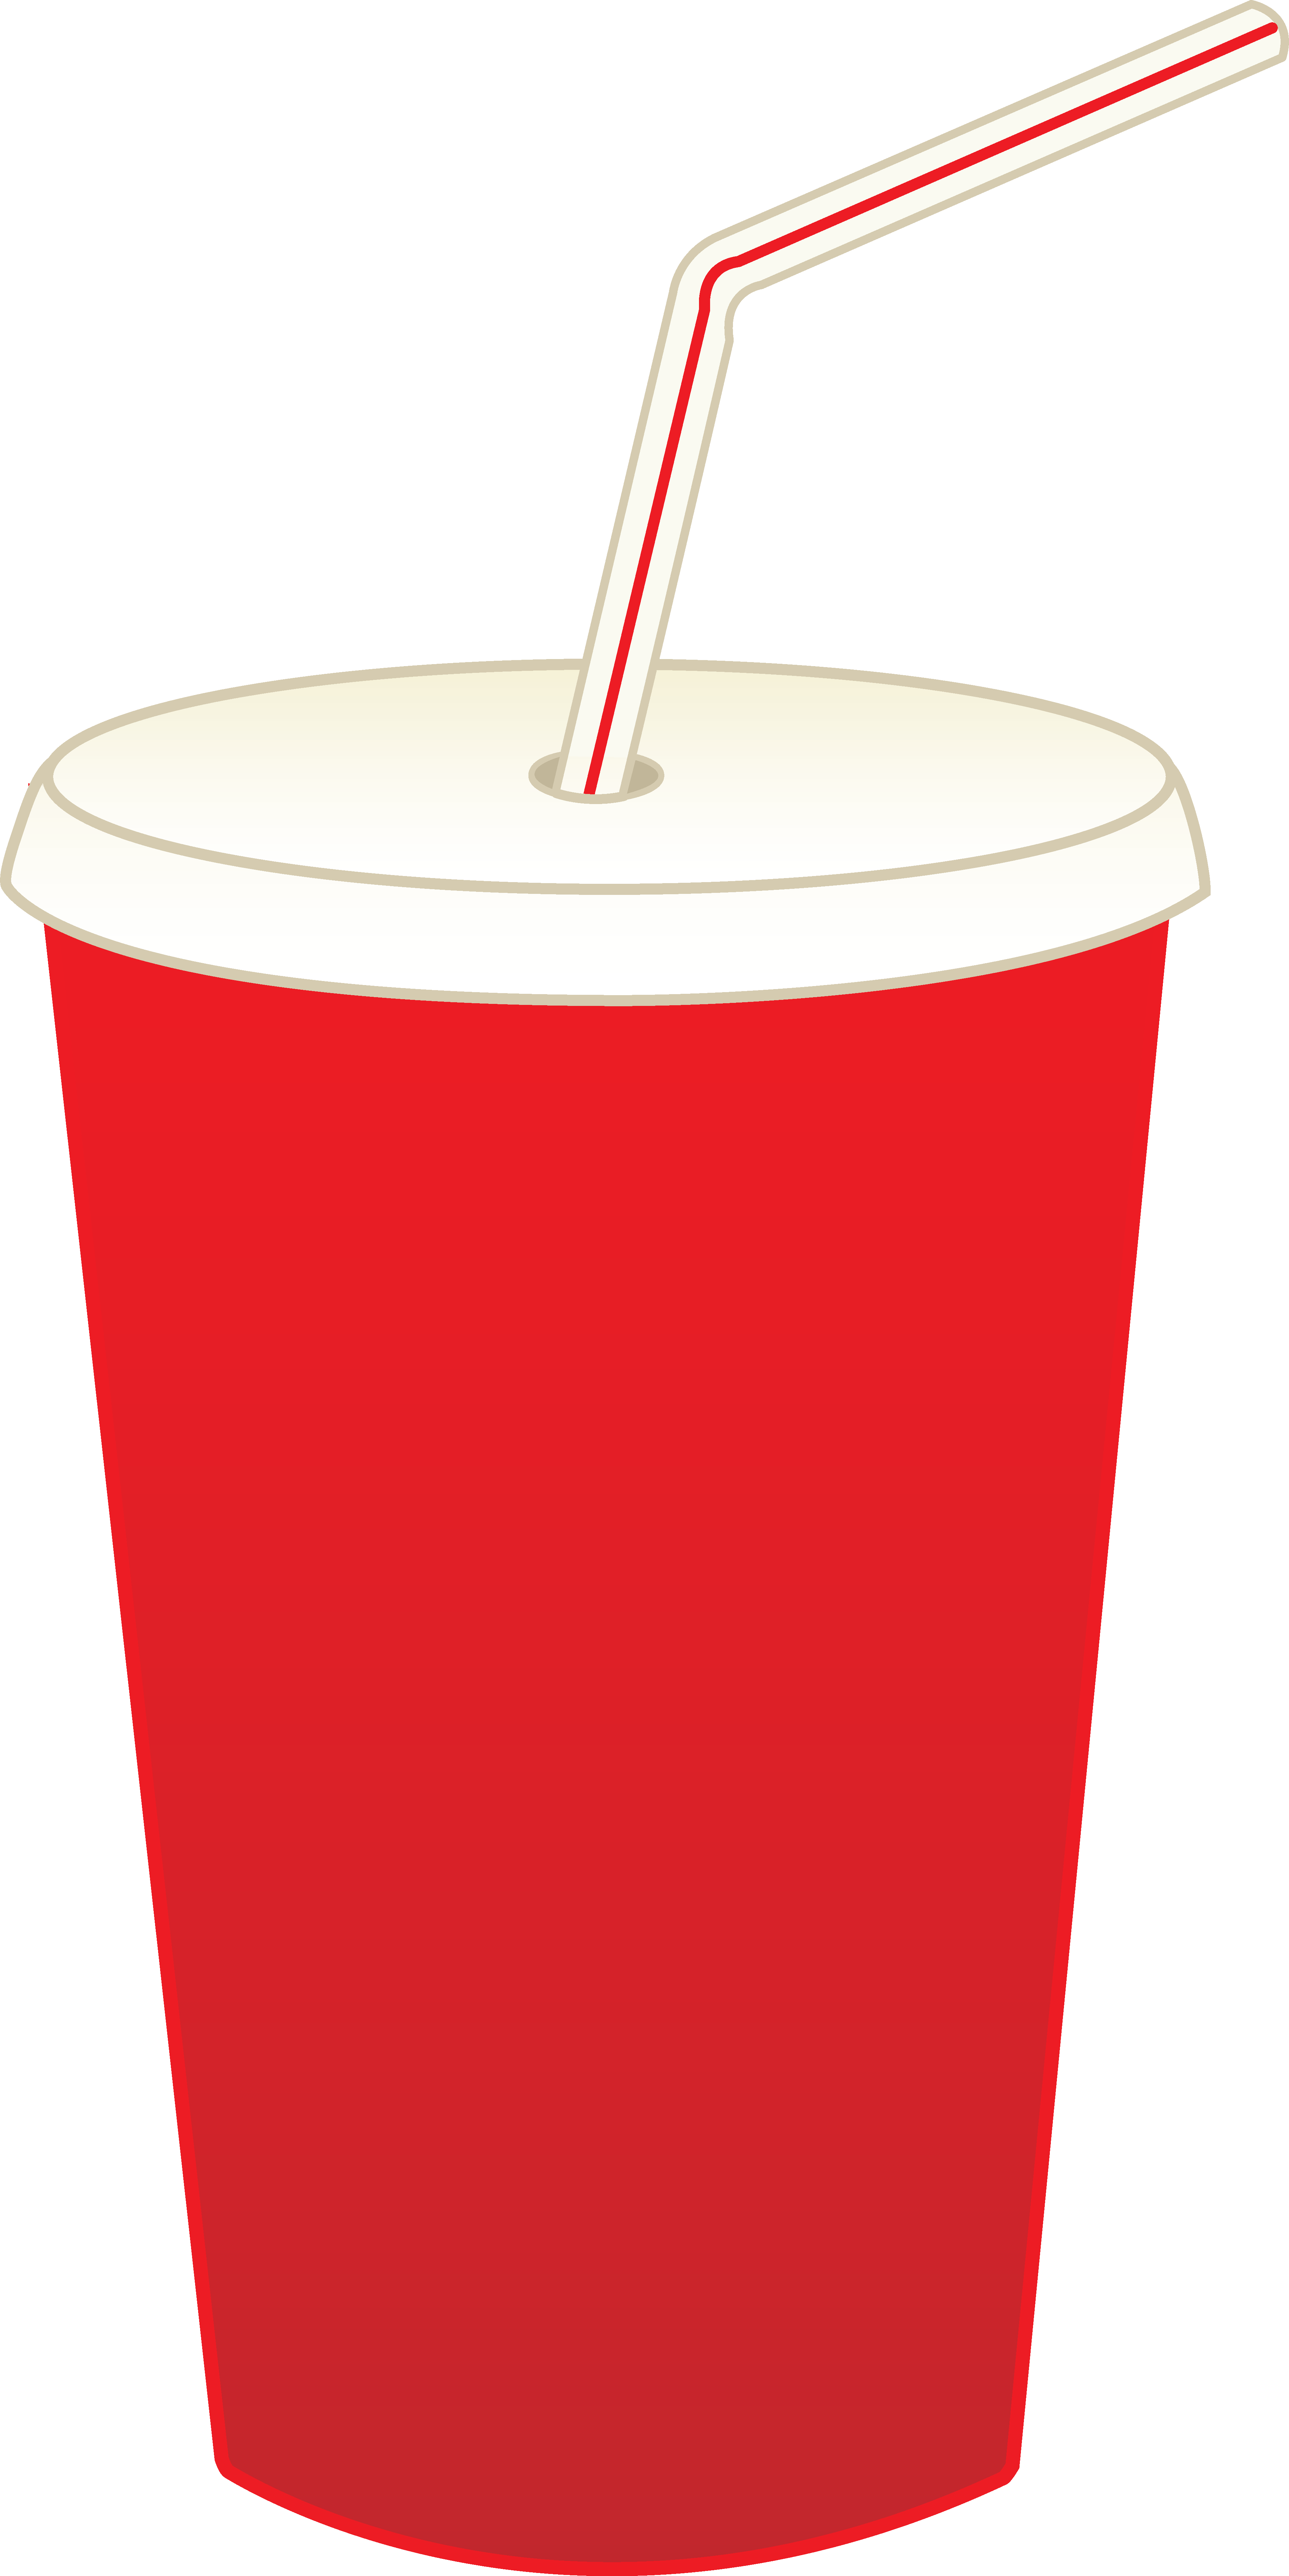 Cup of Soda Pop - Free Clip Art